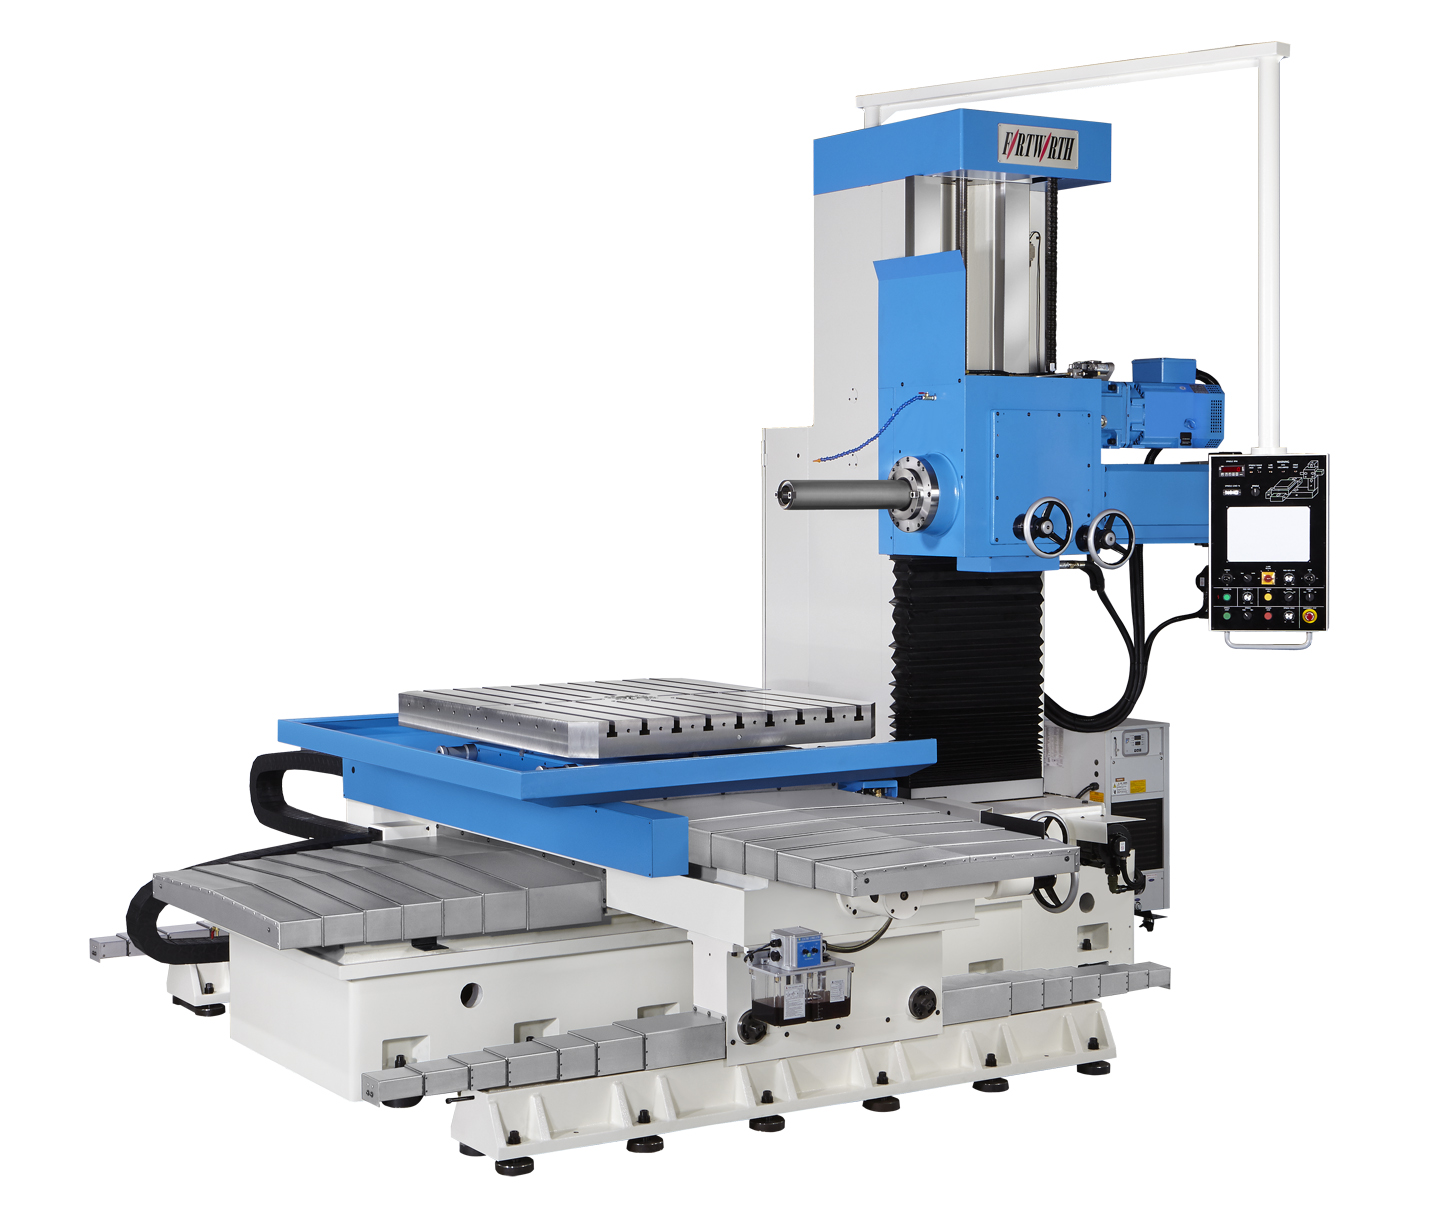 Products|Horizontal Boring & Milling Machine ,Model: HBM-110L